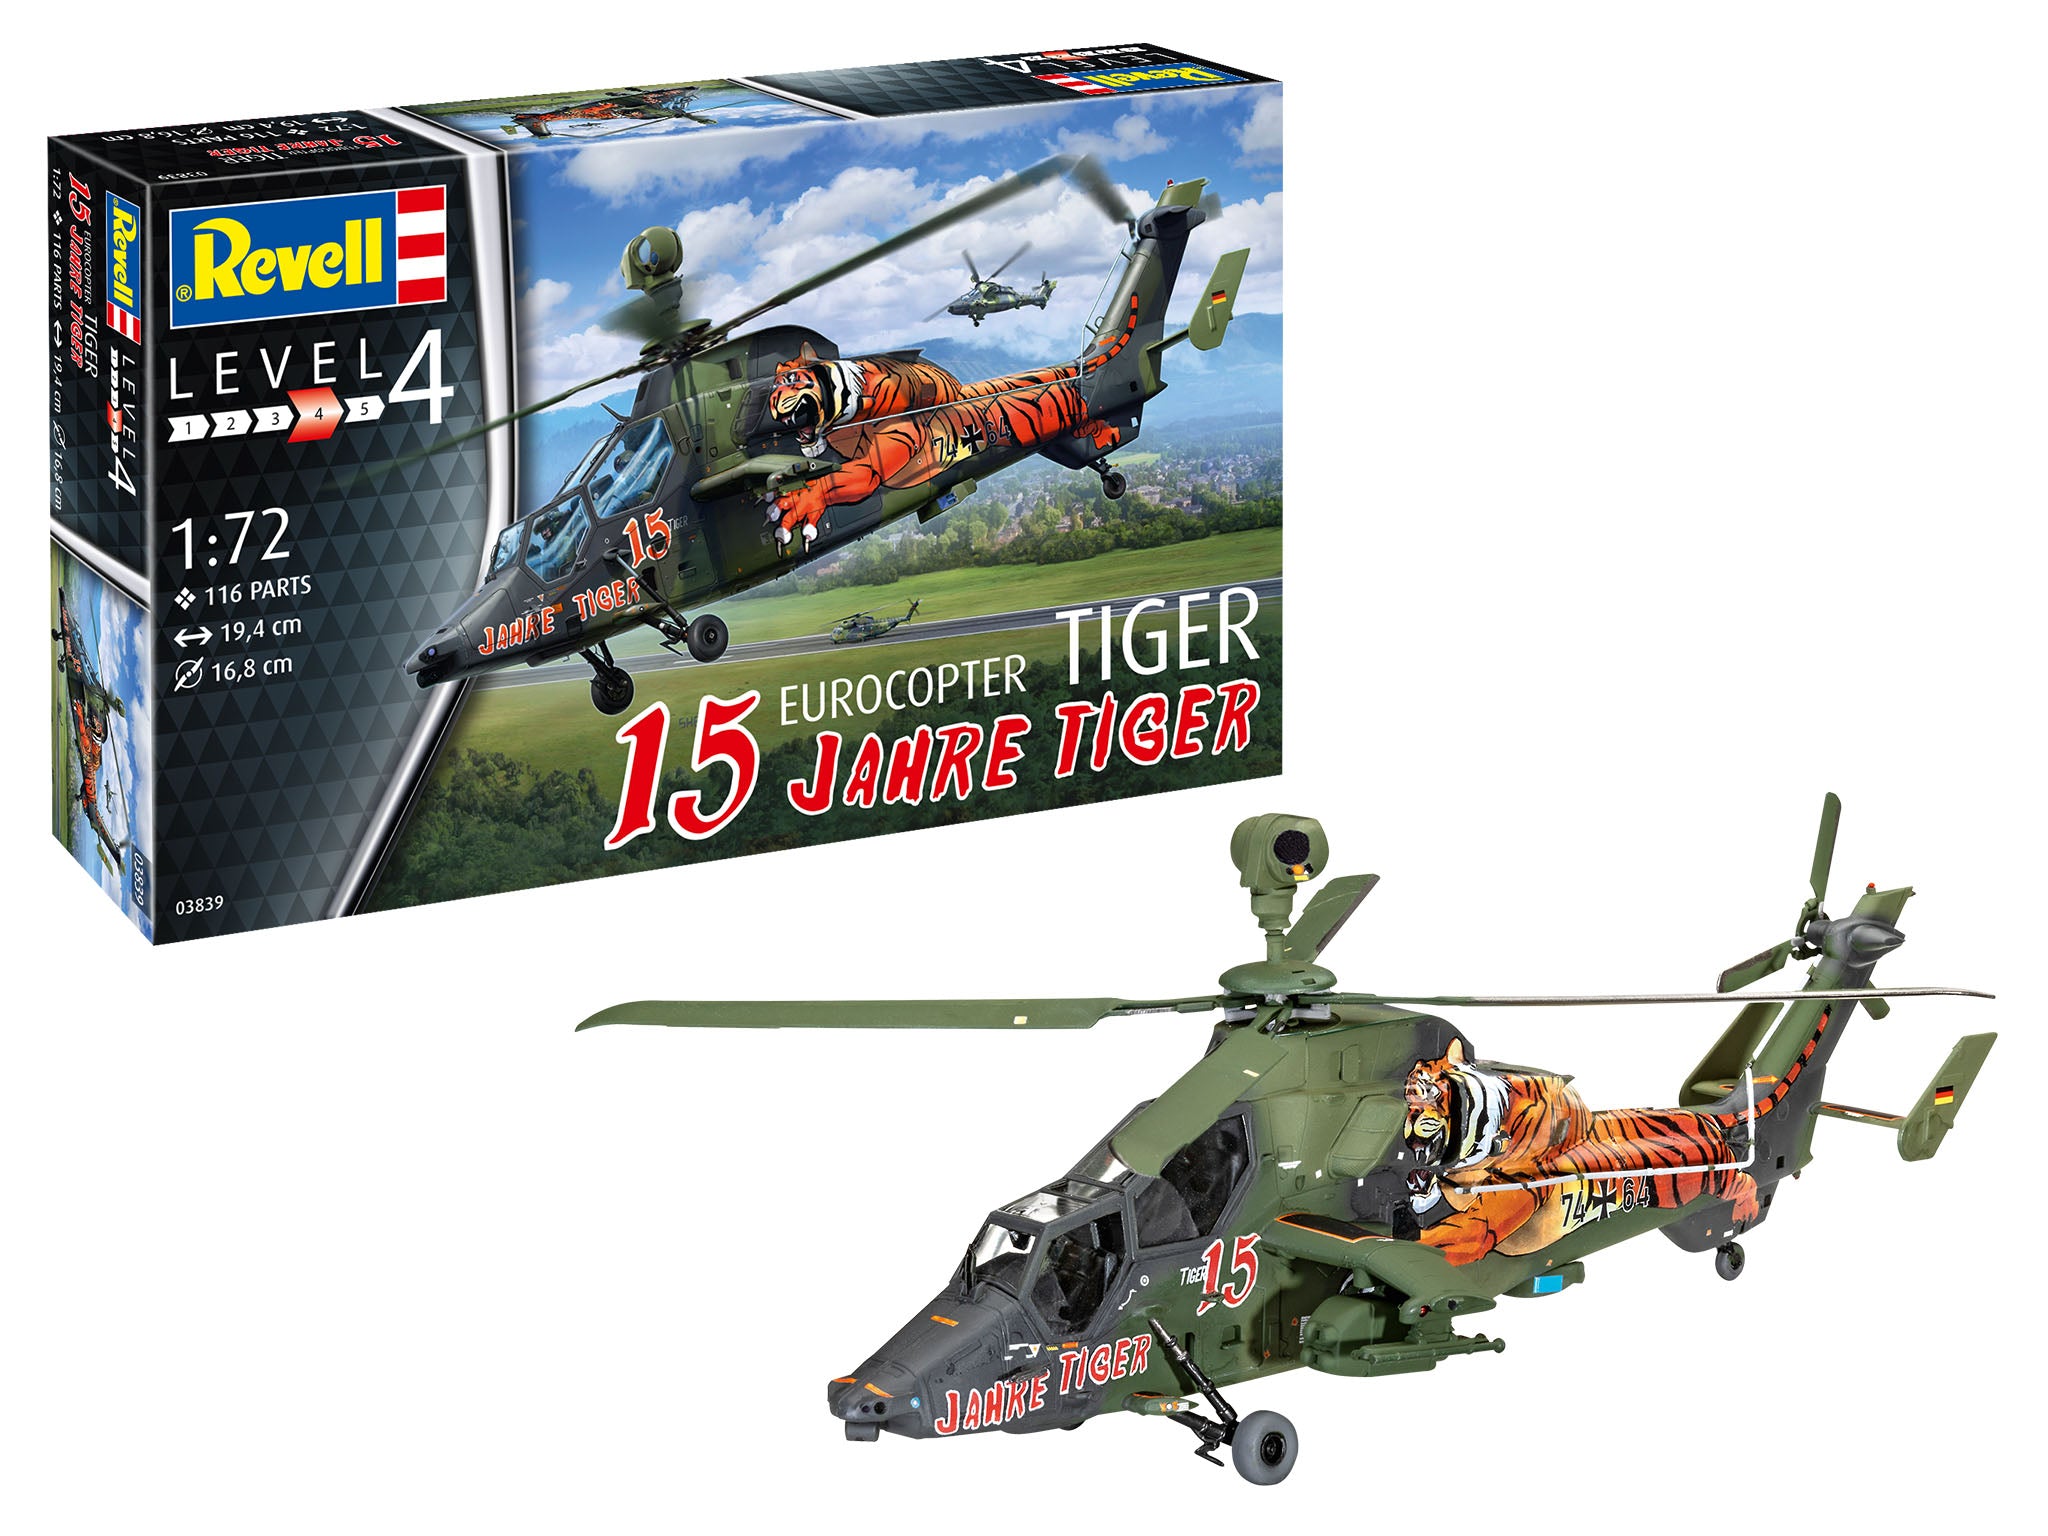 Helicopter Model Kit Revell Eurocopter Tiger 15 Jahre Tiger 1:72